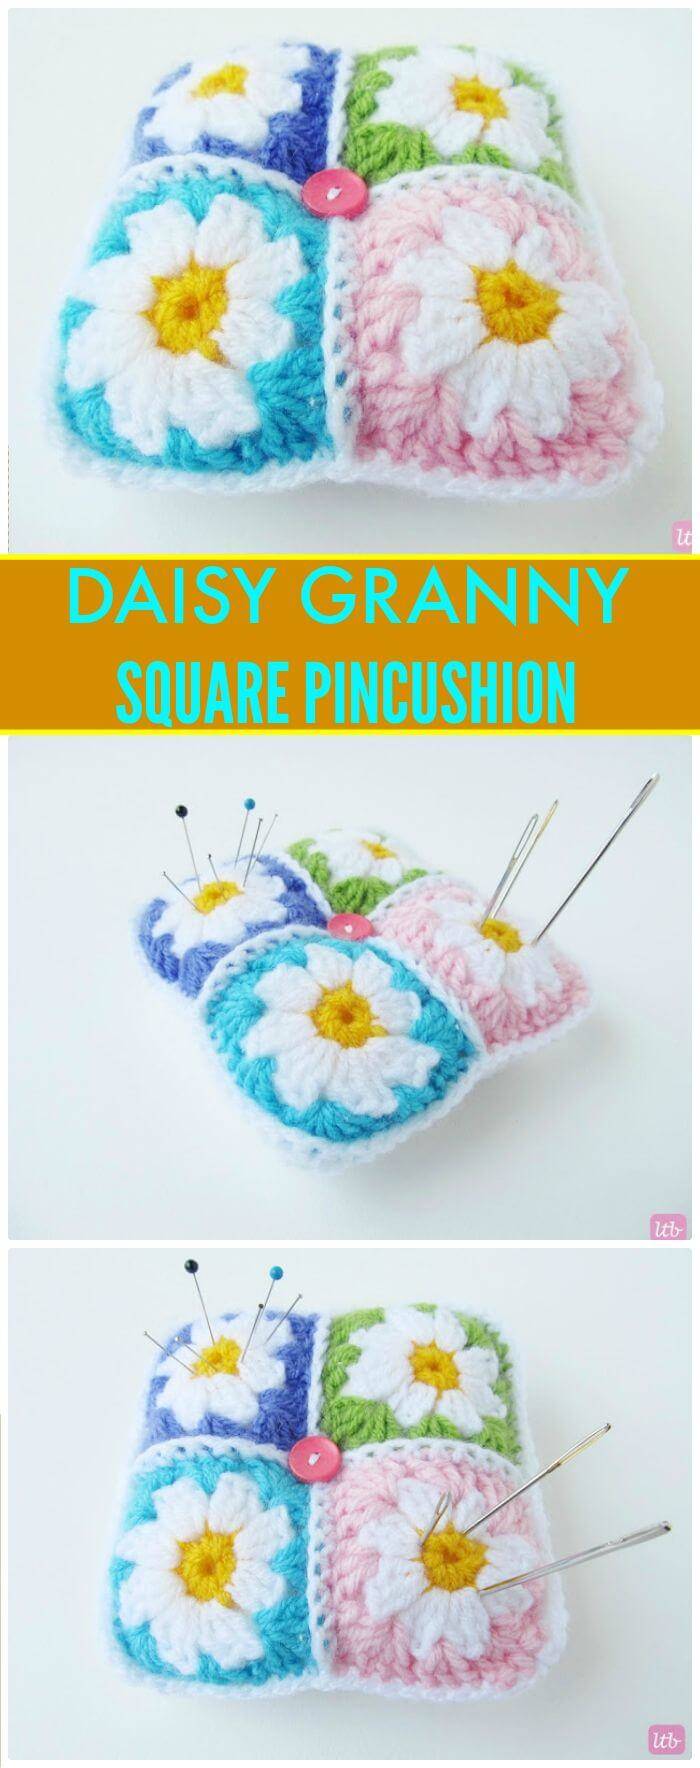 DIY Daisy Granny Square Pincushion, Free crochet flower patterns for hats! DIY crochet flower tutorials!